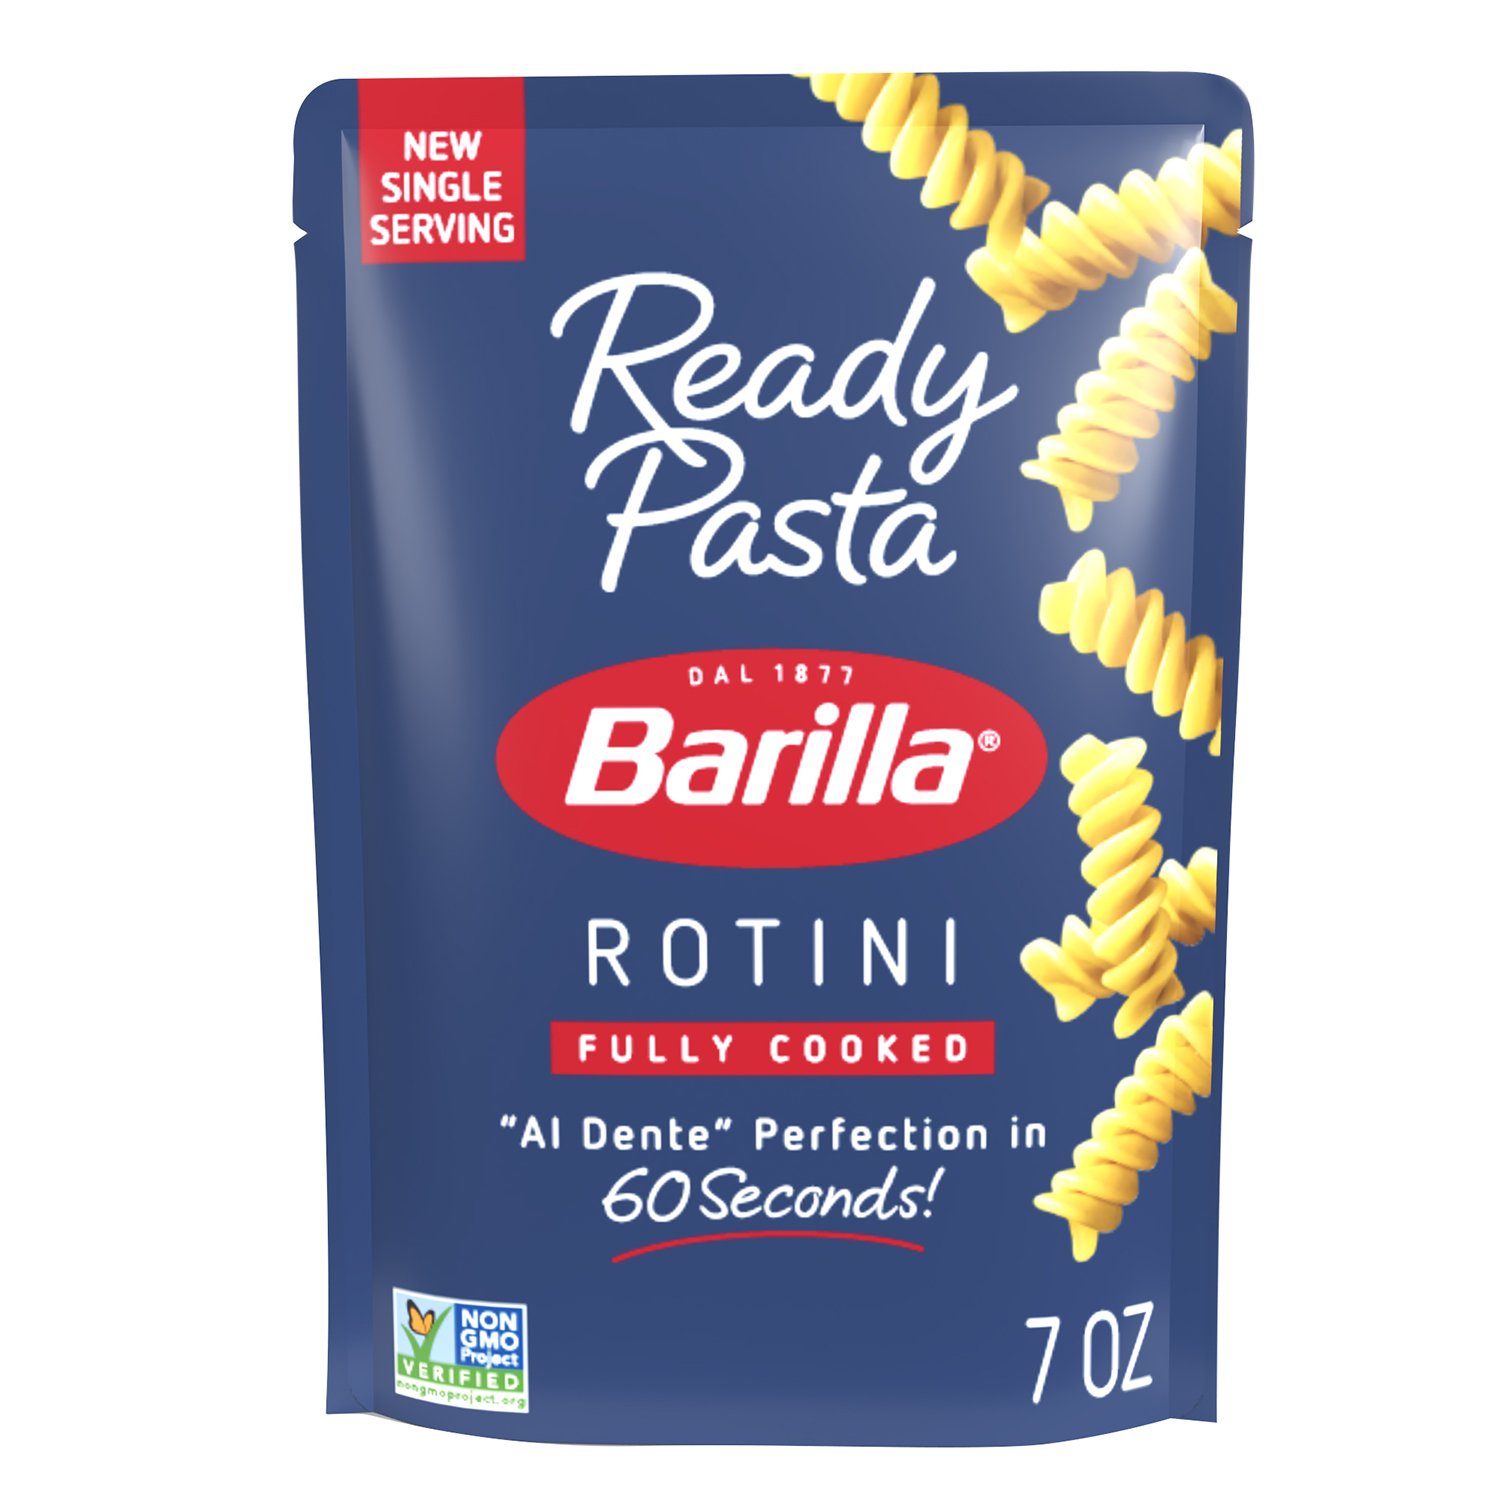 Pasta Rotini H-E-B Barilla Pasta - Shop Ready at